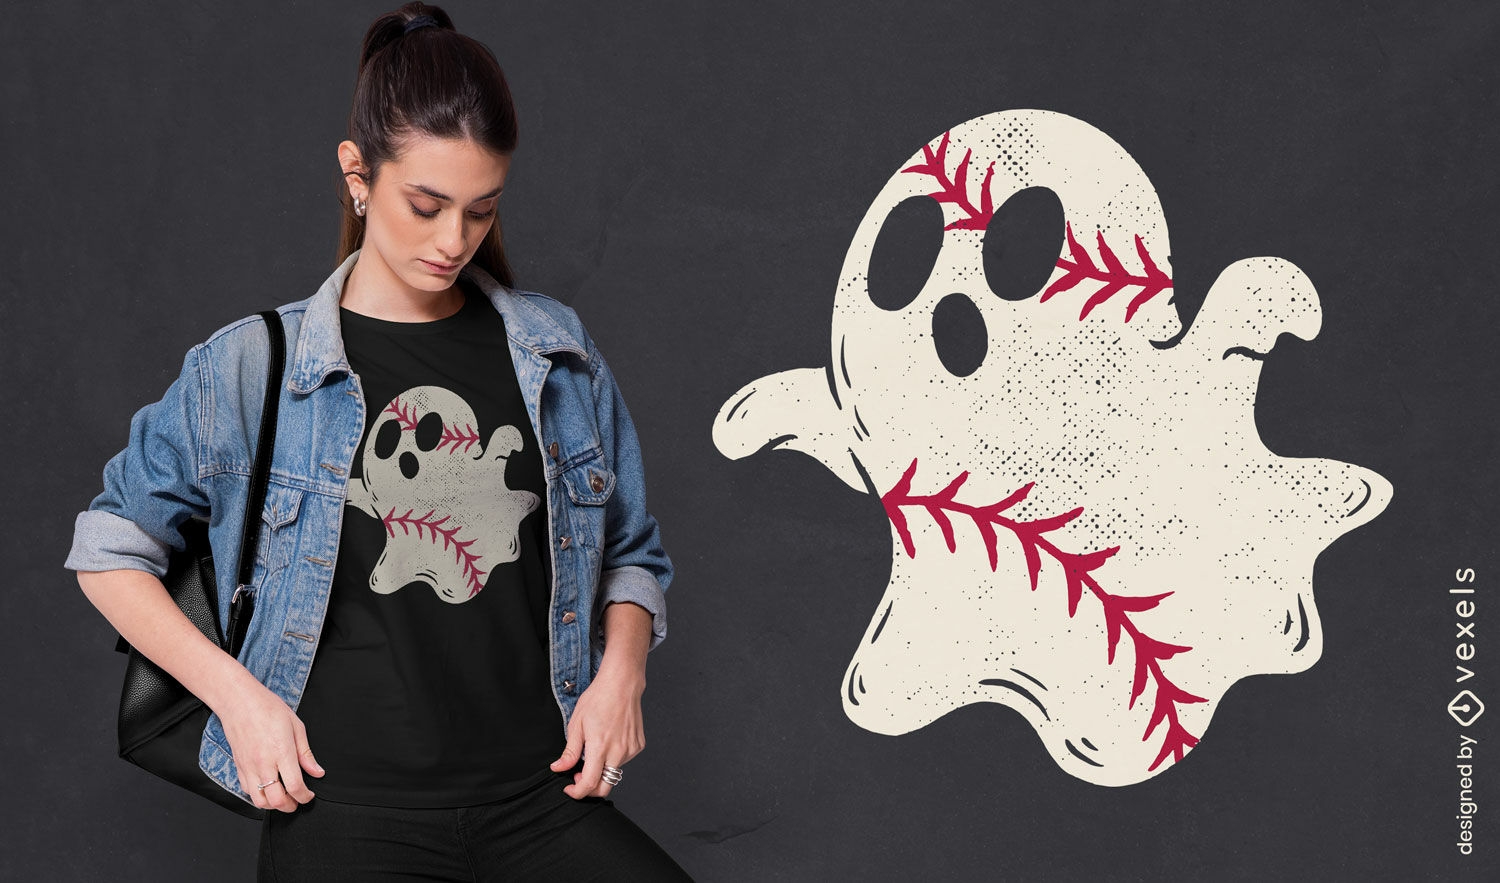 Dise?o de camiseta espeluznante fantasma de b?isbol.